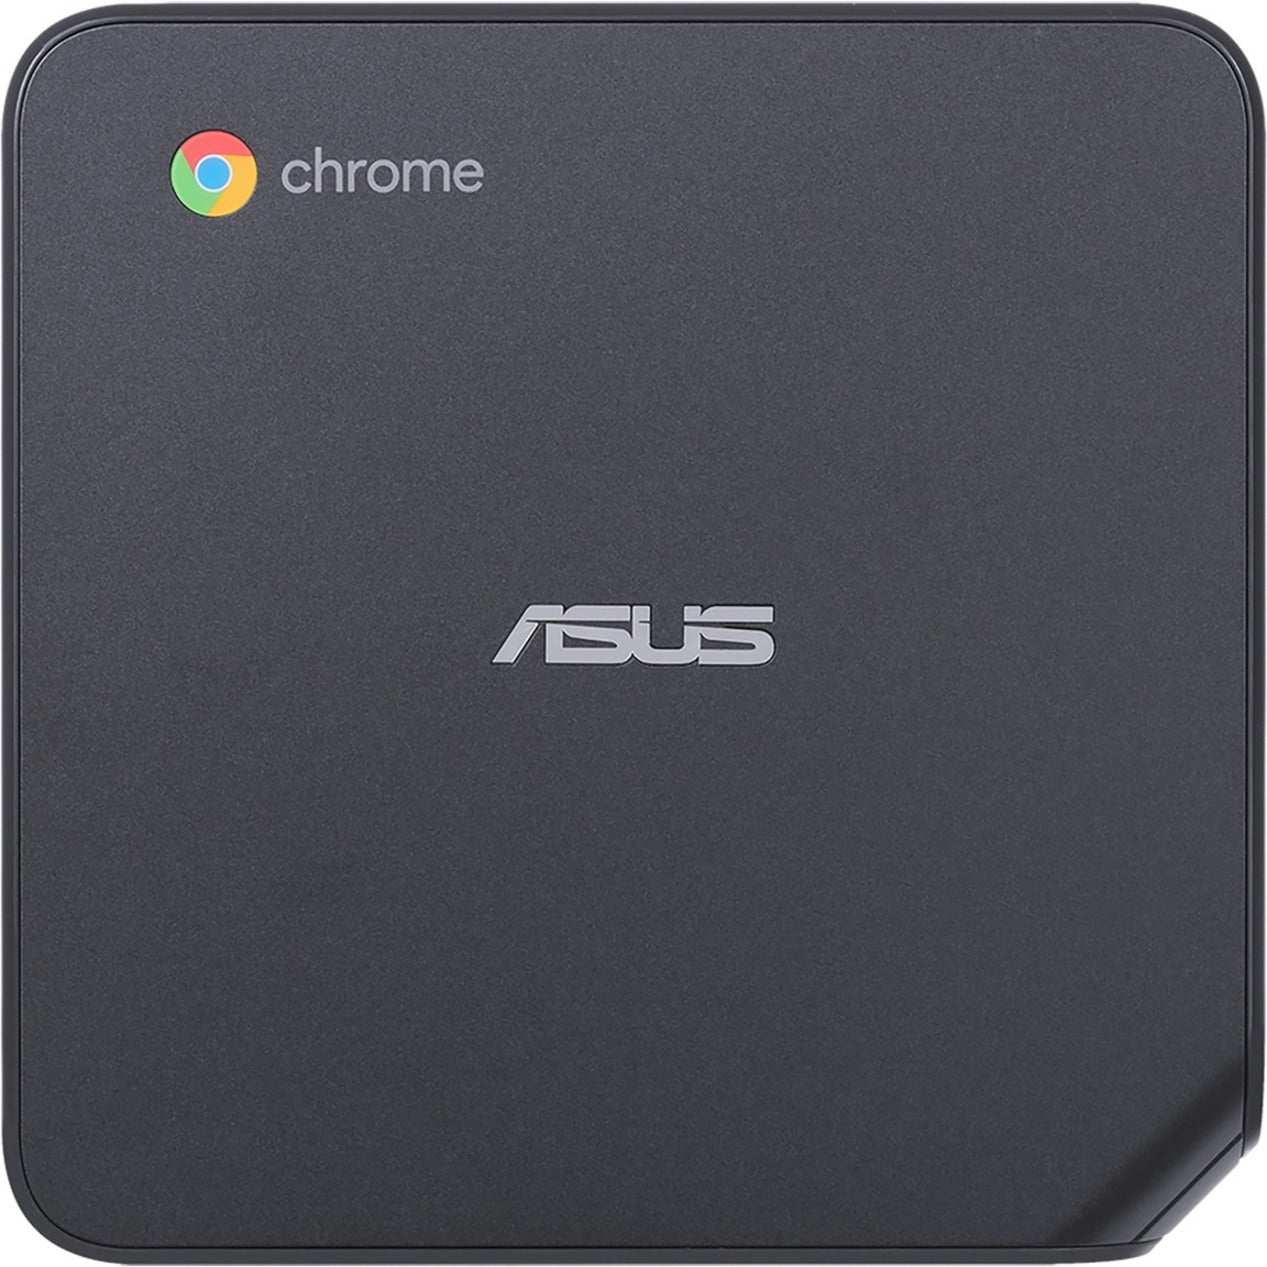 Asus CHROMEBOX4-FC017UENT Chromebox, Intel Celeron 5205U, 4 GB RAM, Gun Metal